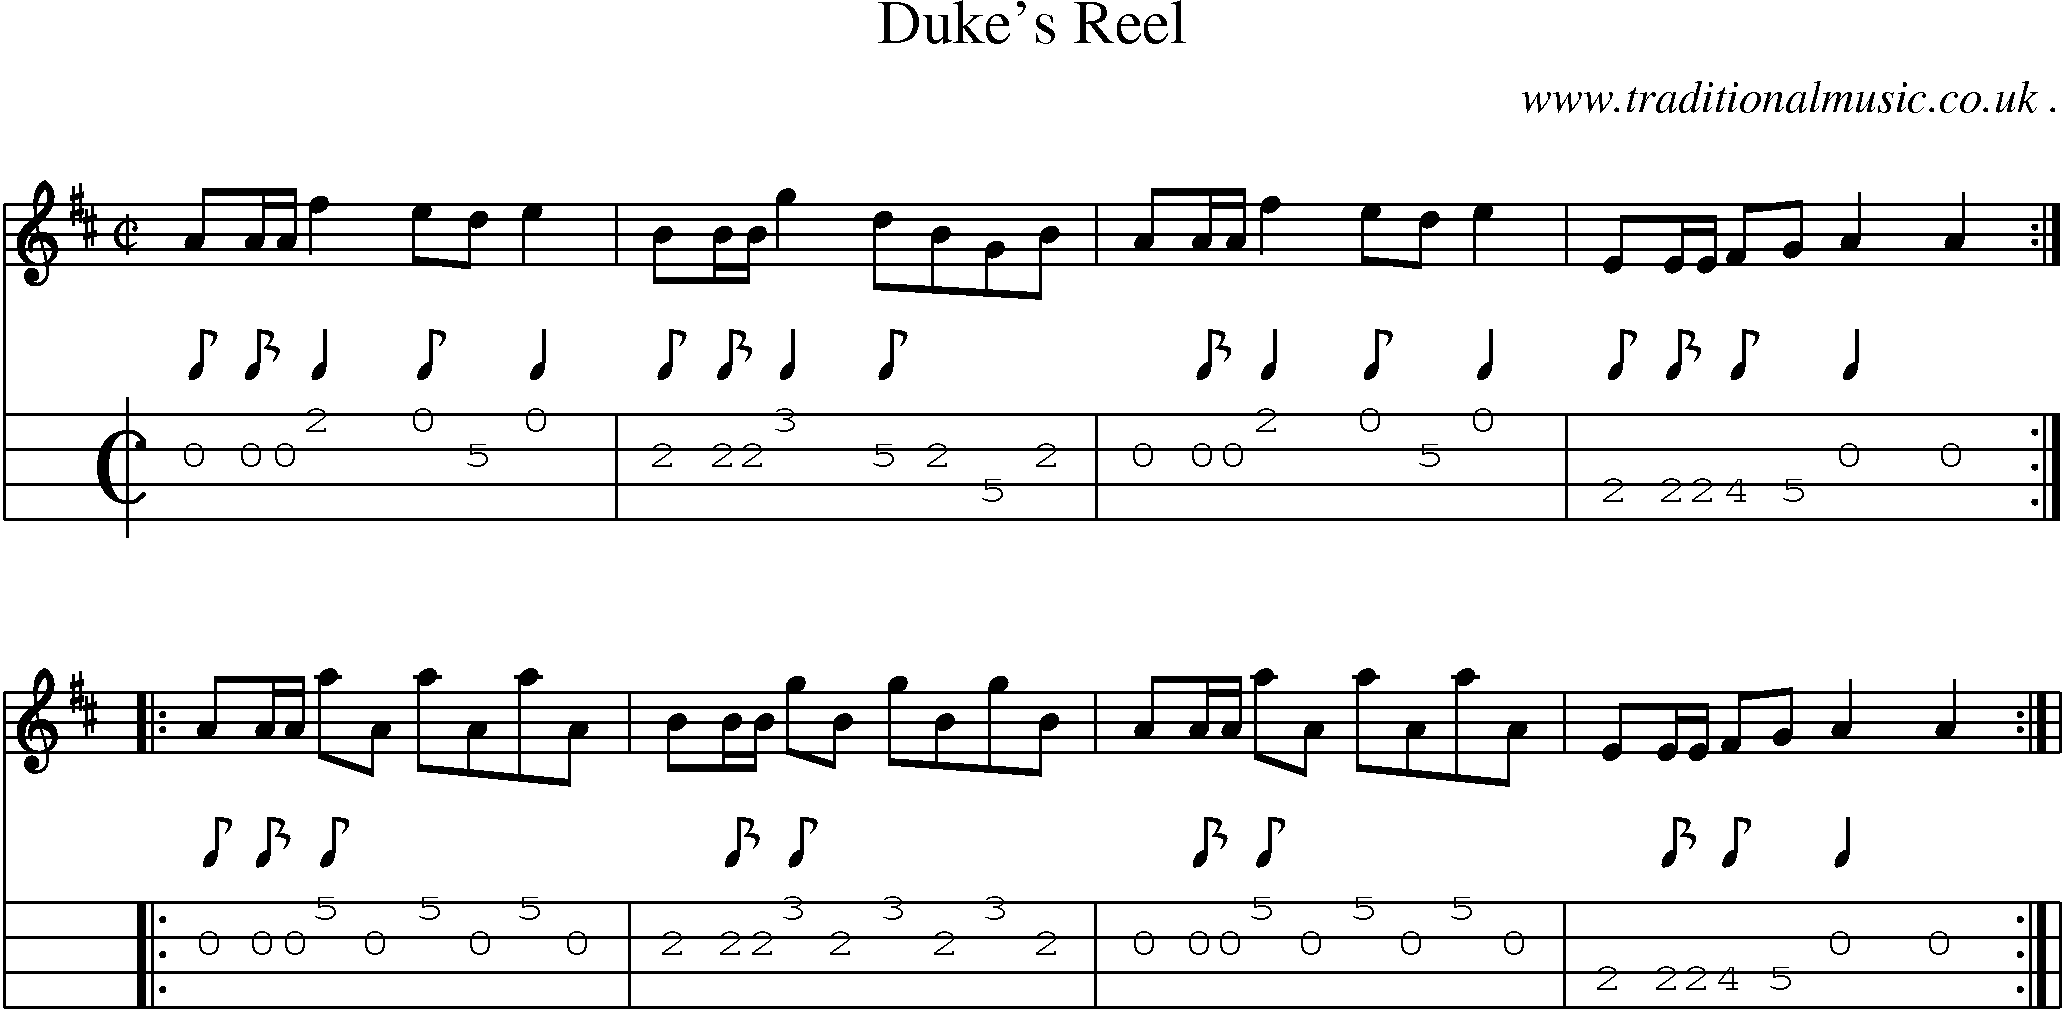 Sheet-Music and Mandolin Tabs for Dukes Reel